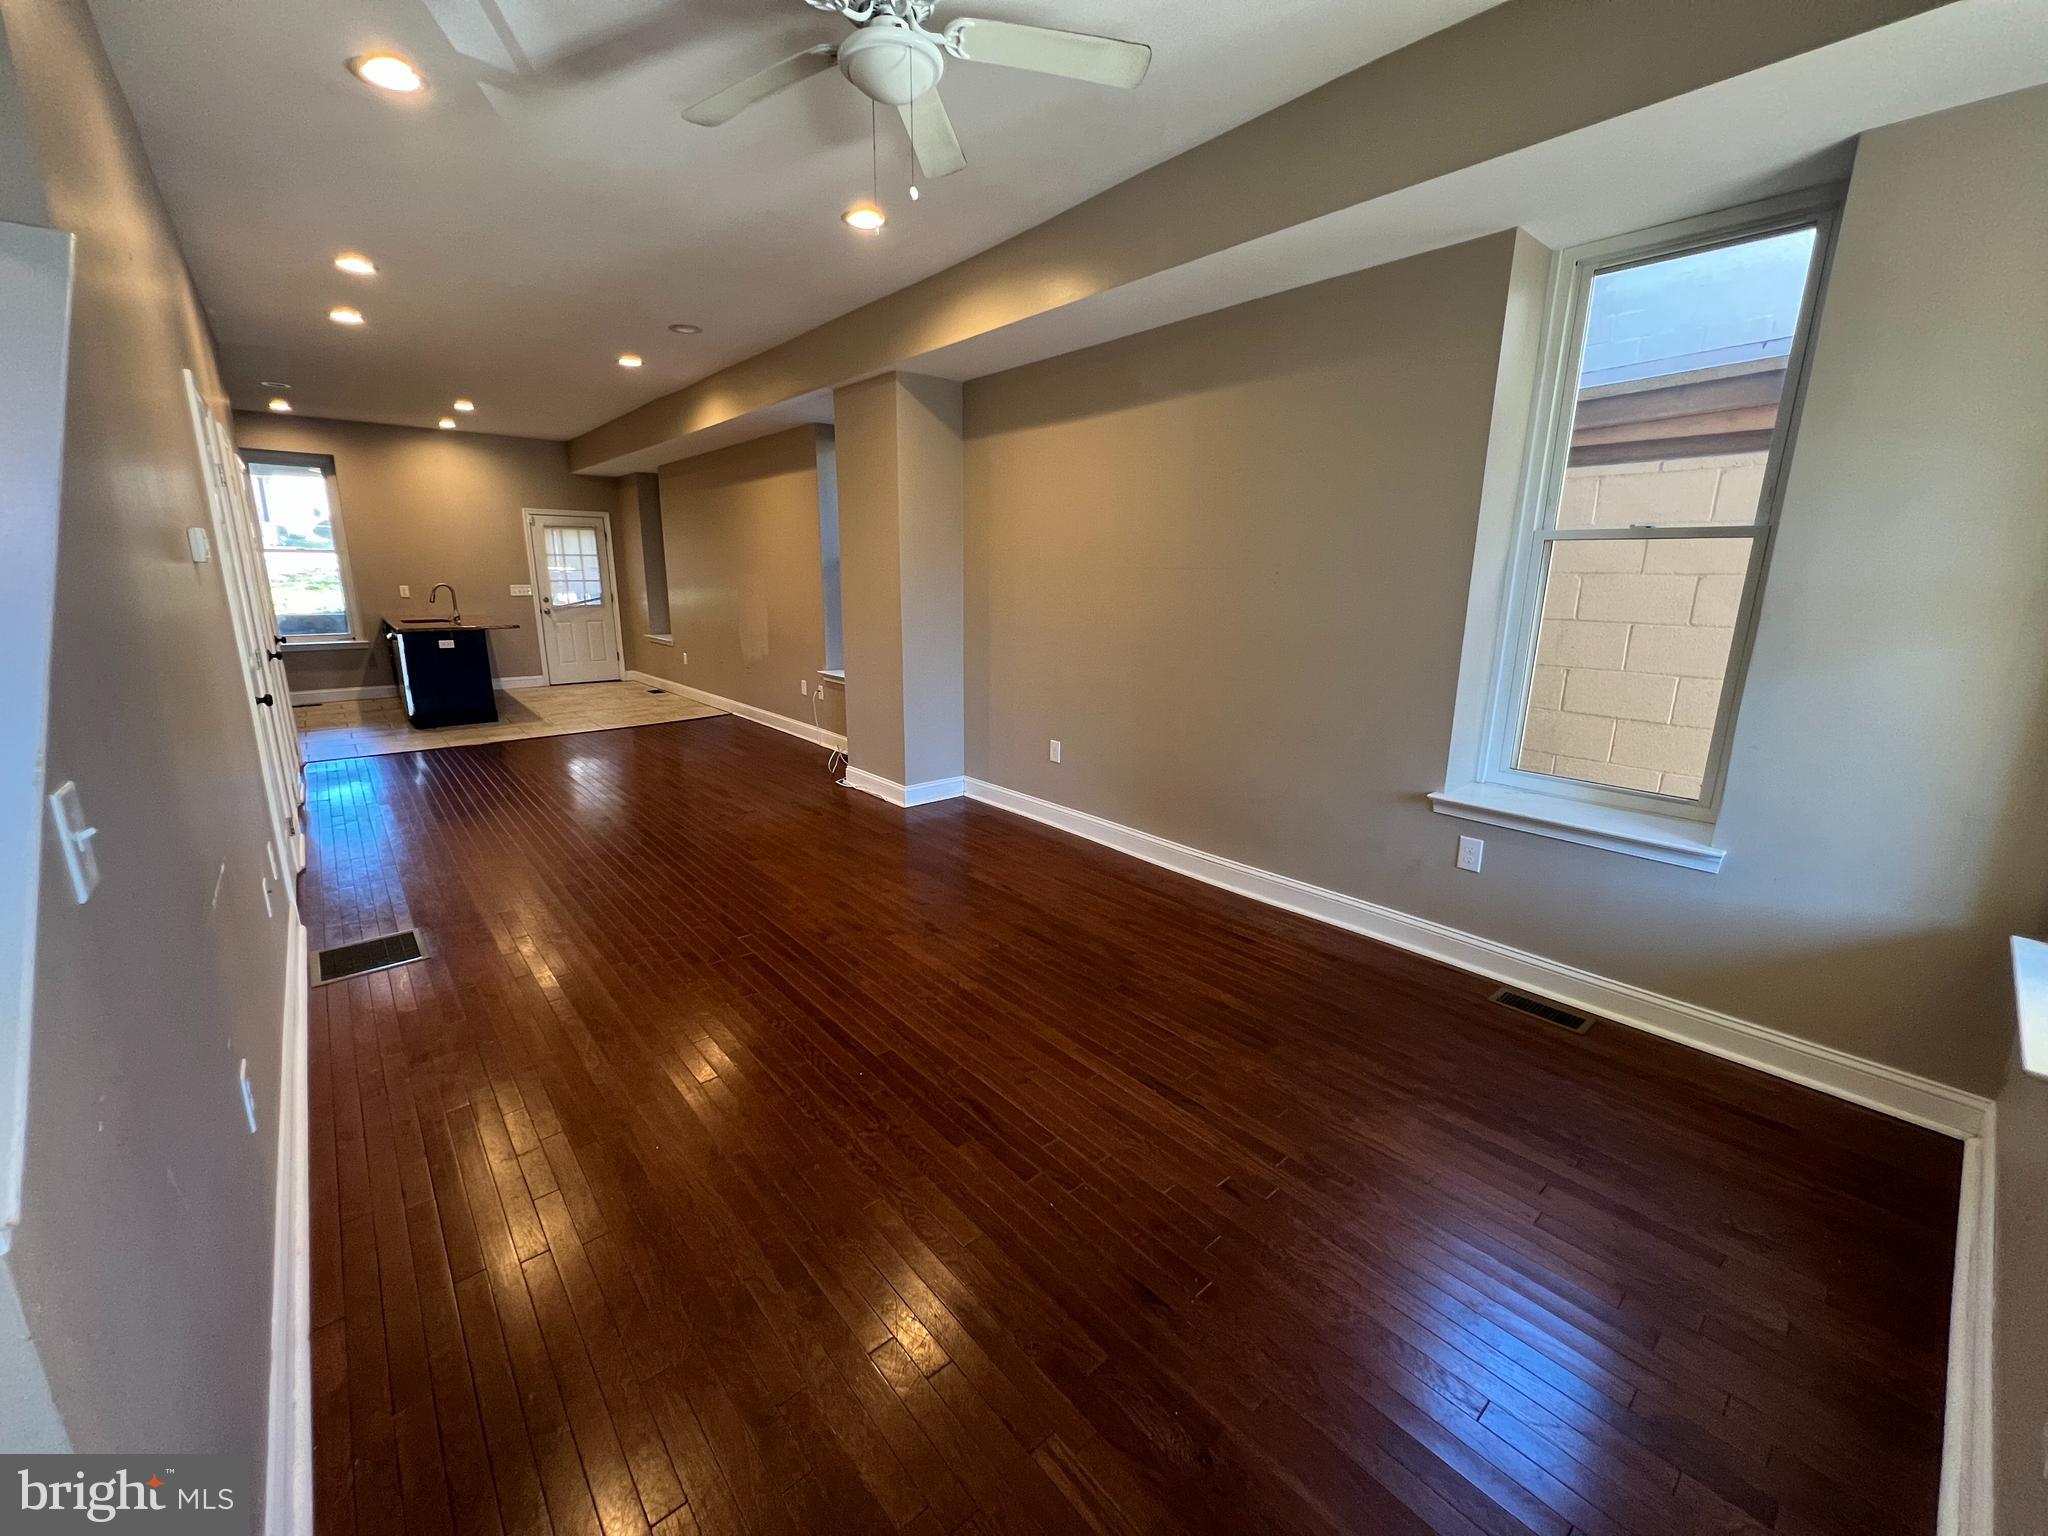 a view of livingroom and hardwood floor